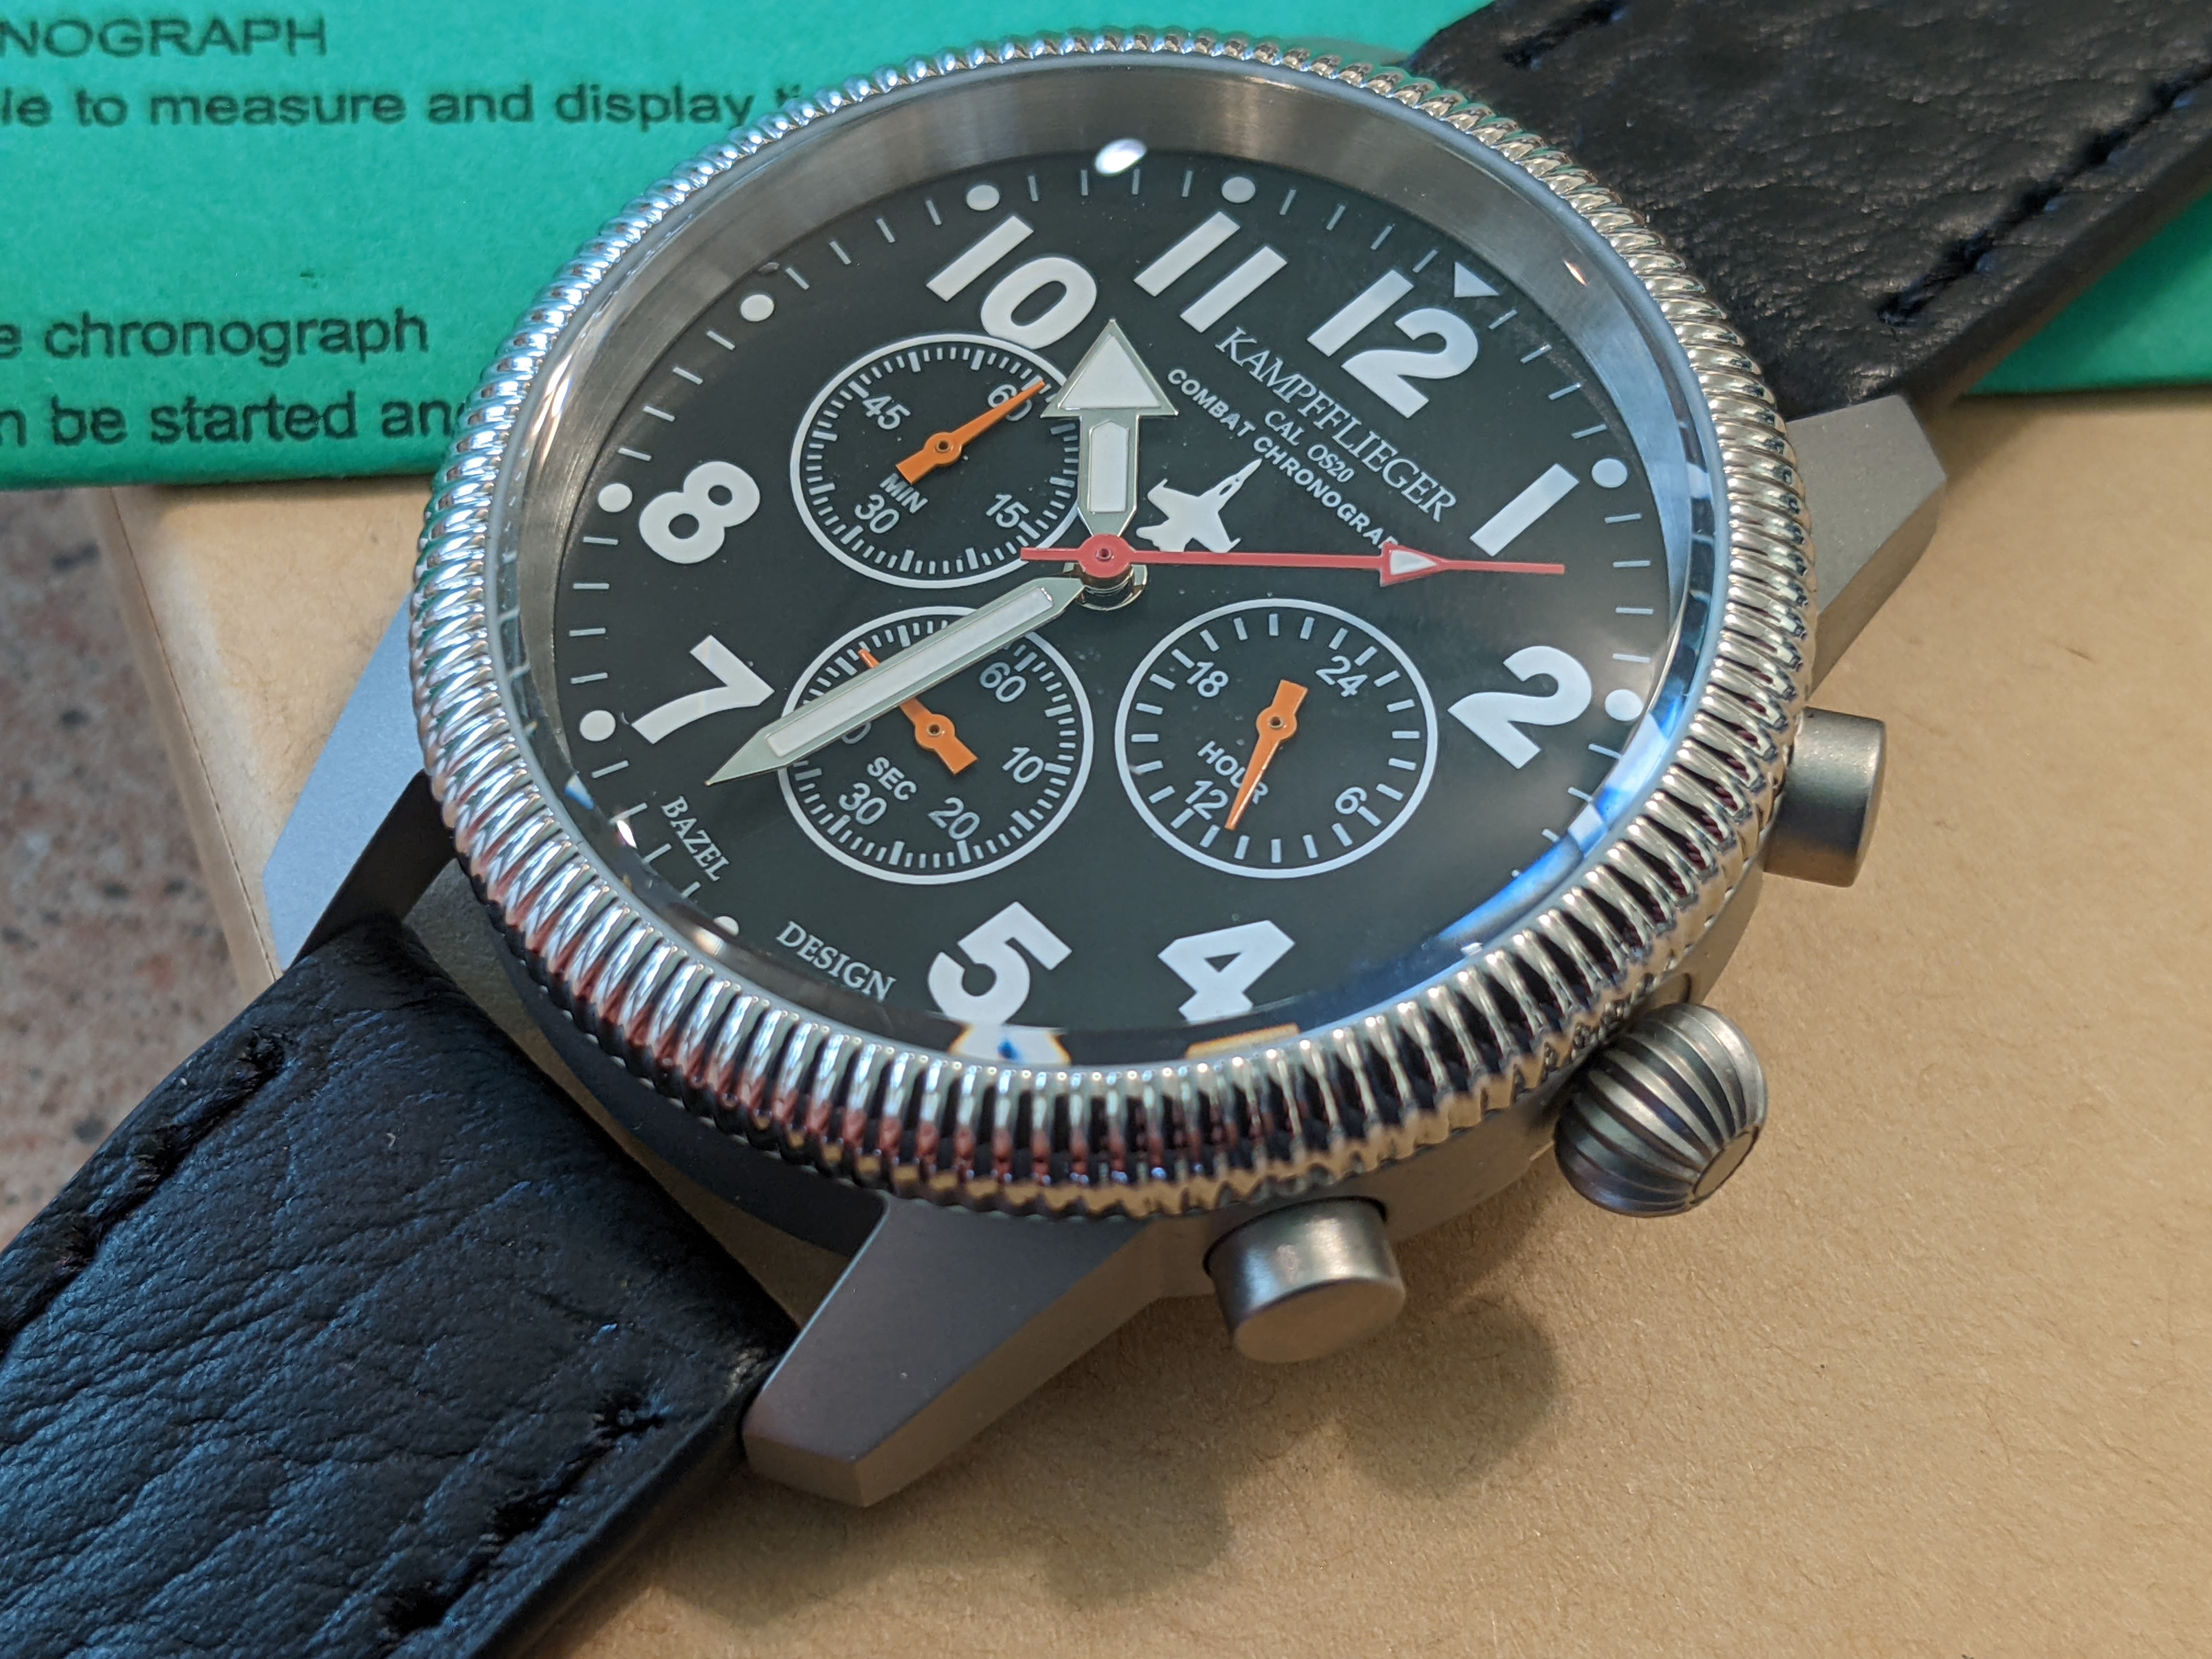 German Made Airforce Watch luftwaffe Combat Pilot Chronograph - 24 hour